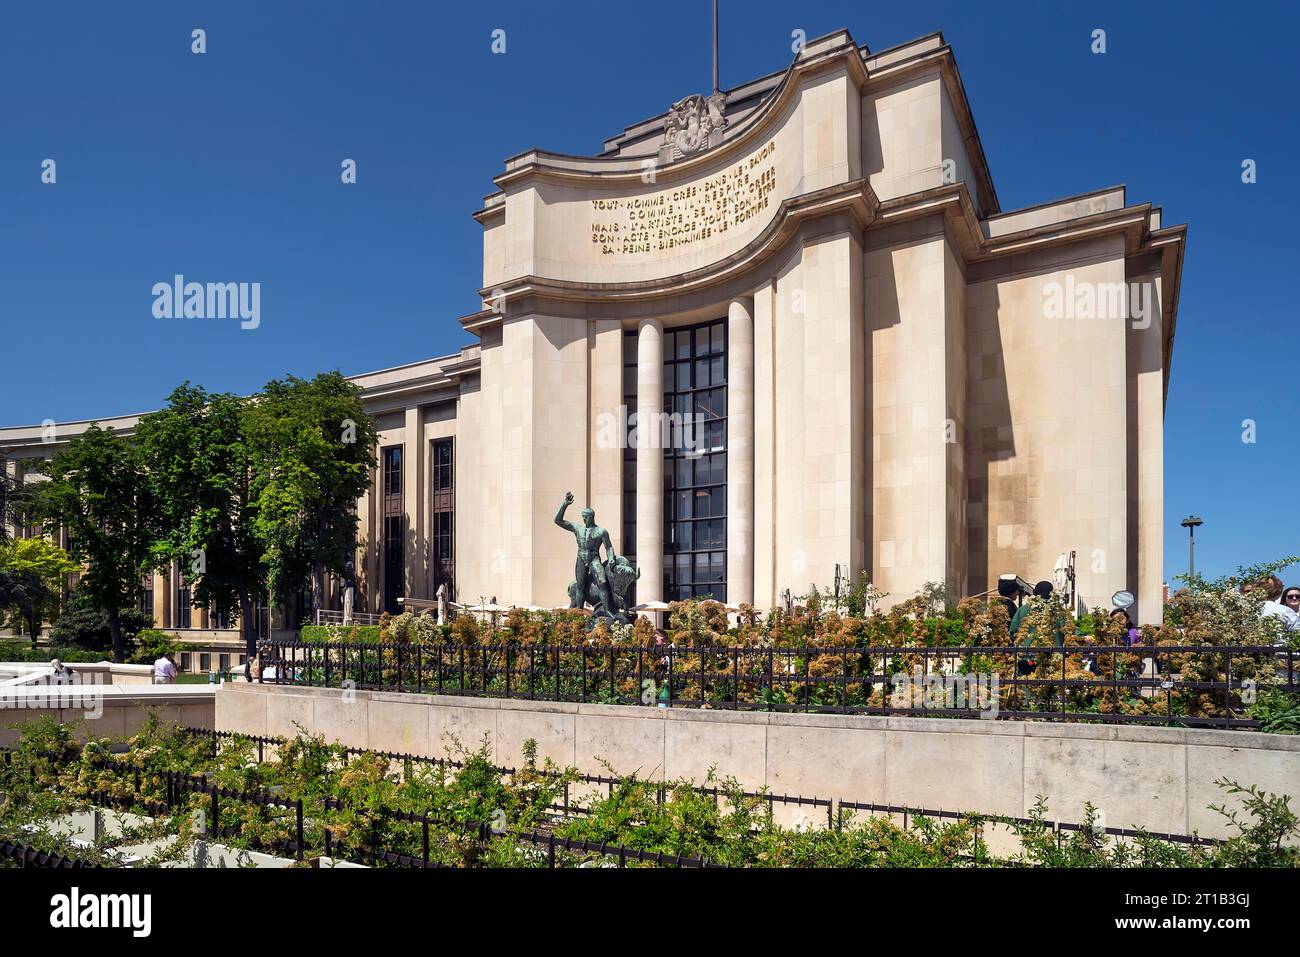 Palais de Chaillot, Trocadero, in front of it bronze sculpture of Hercules and the Cretan Bull, Paris, France Stock Photo